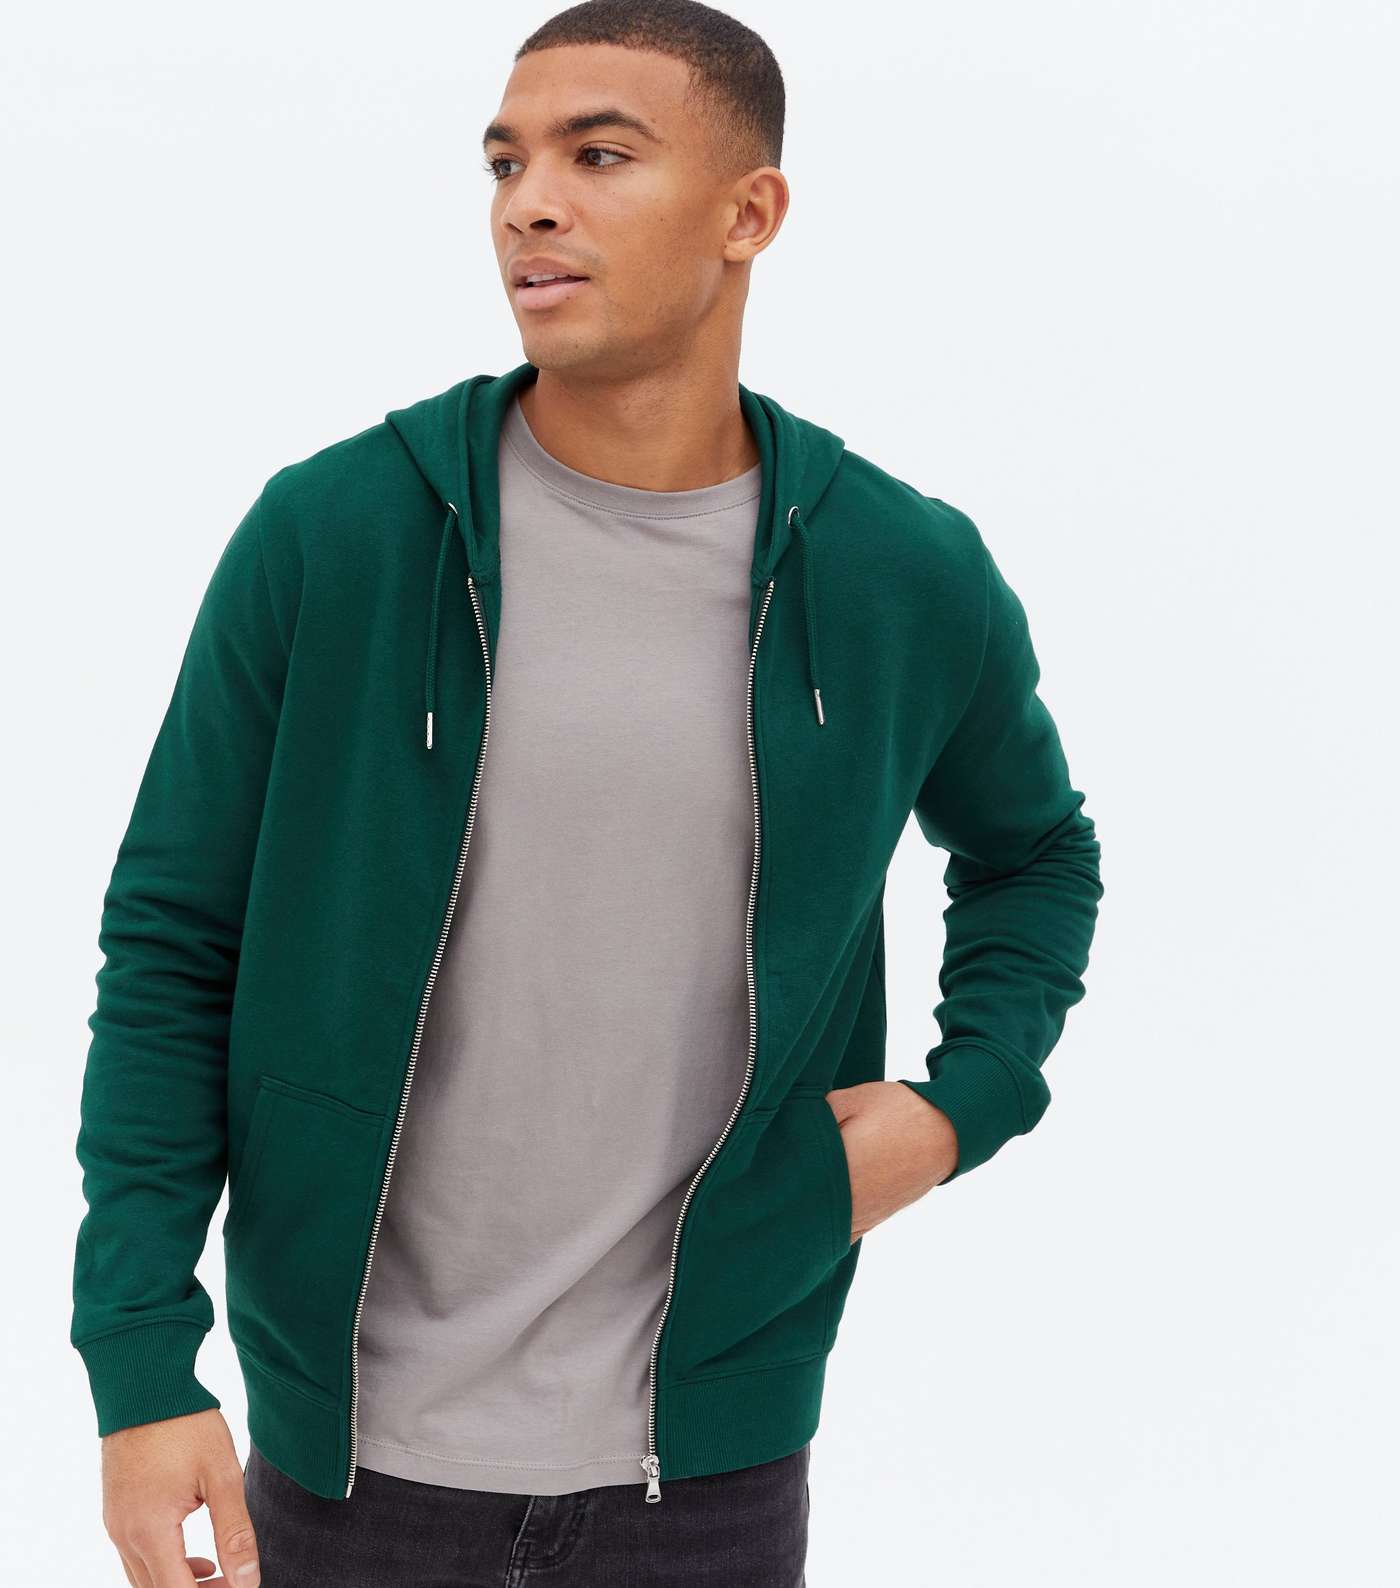 https://media2.newlookassets.com/i/newlook/693728938/mens/clothing/hoodies-sweatshirts/dark-green-jersey-long-sleeve-zip-hoodie.jpg?strip=true&w=1400&qlt=60&fmt=jpeg